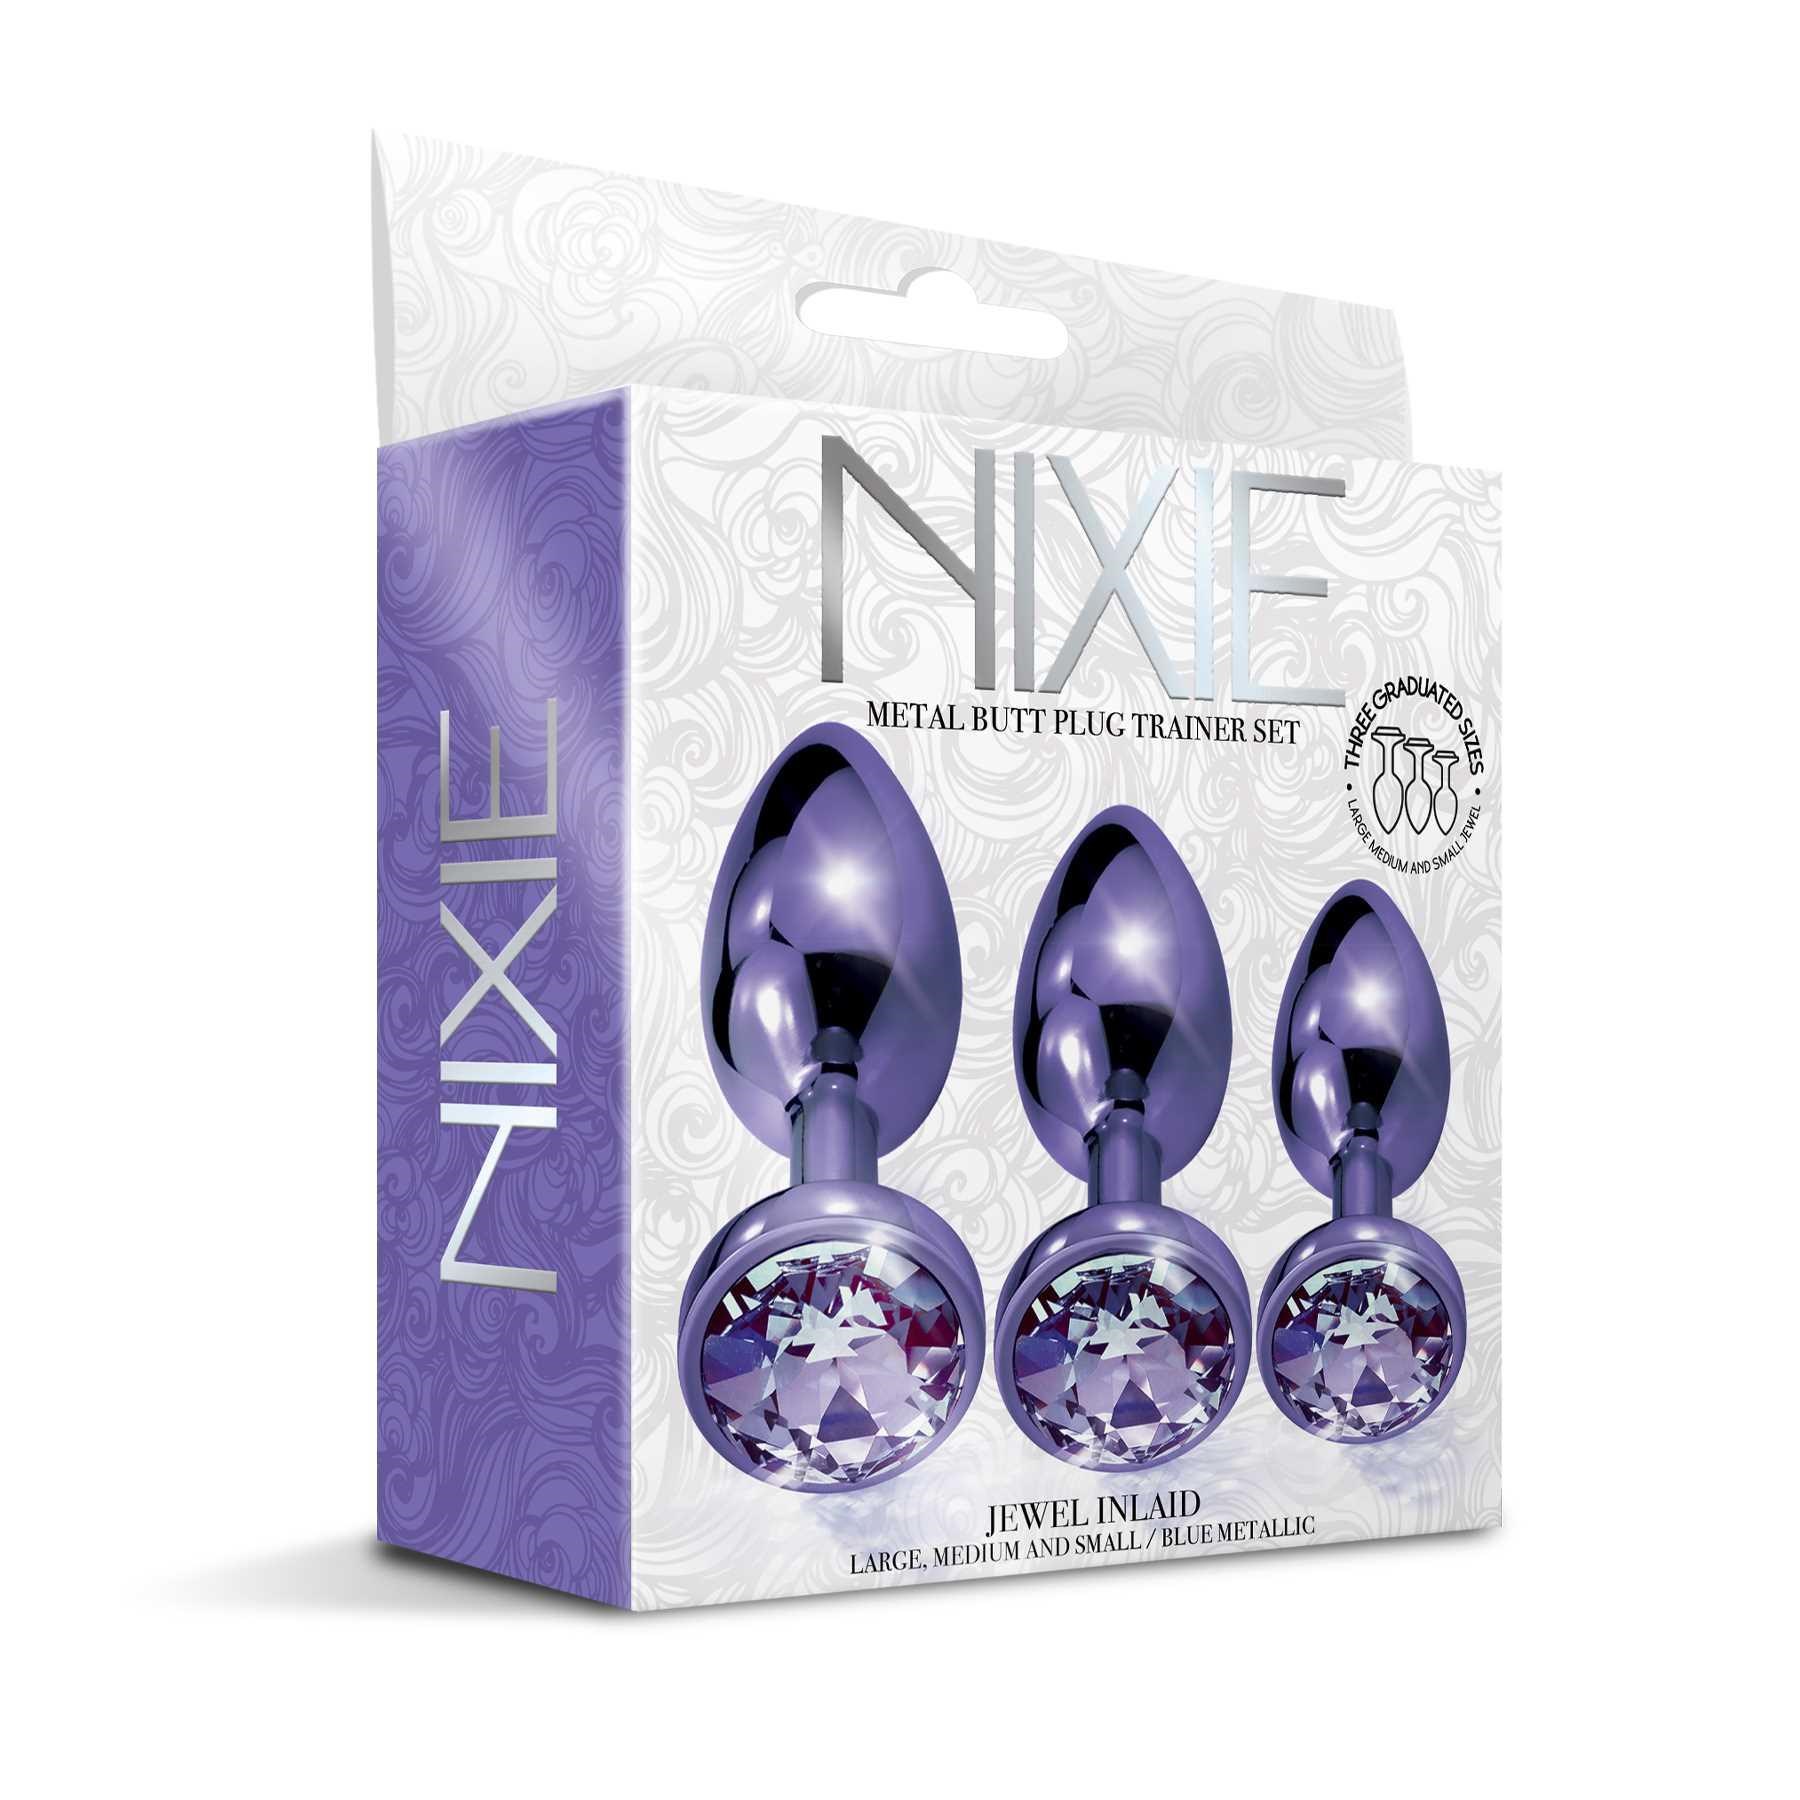 NIXIE Metal Butt Plug Trainer Set Metallic purple box